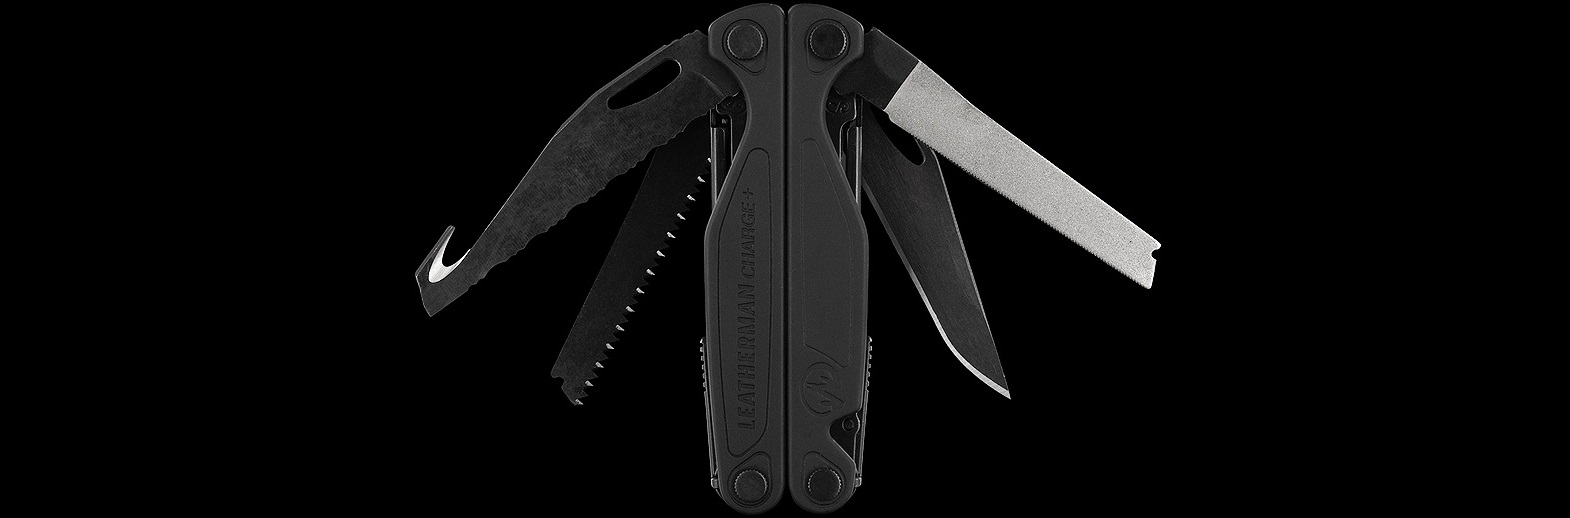 Багатофункціональний інструмент Leatherman Charge Plus Black 832601 з лезом ножа зі сталі 154CM